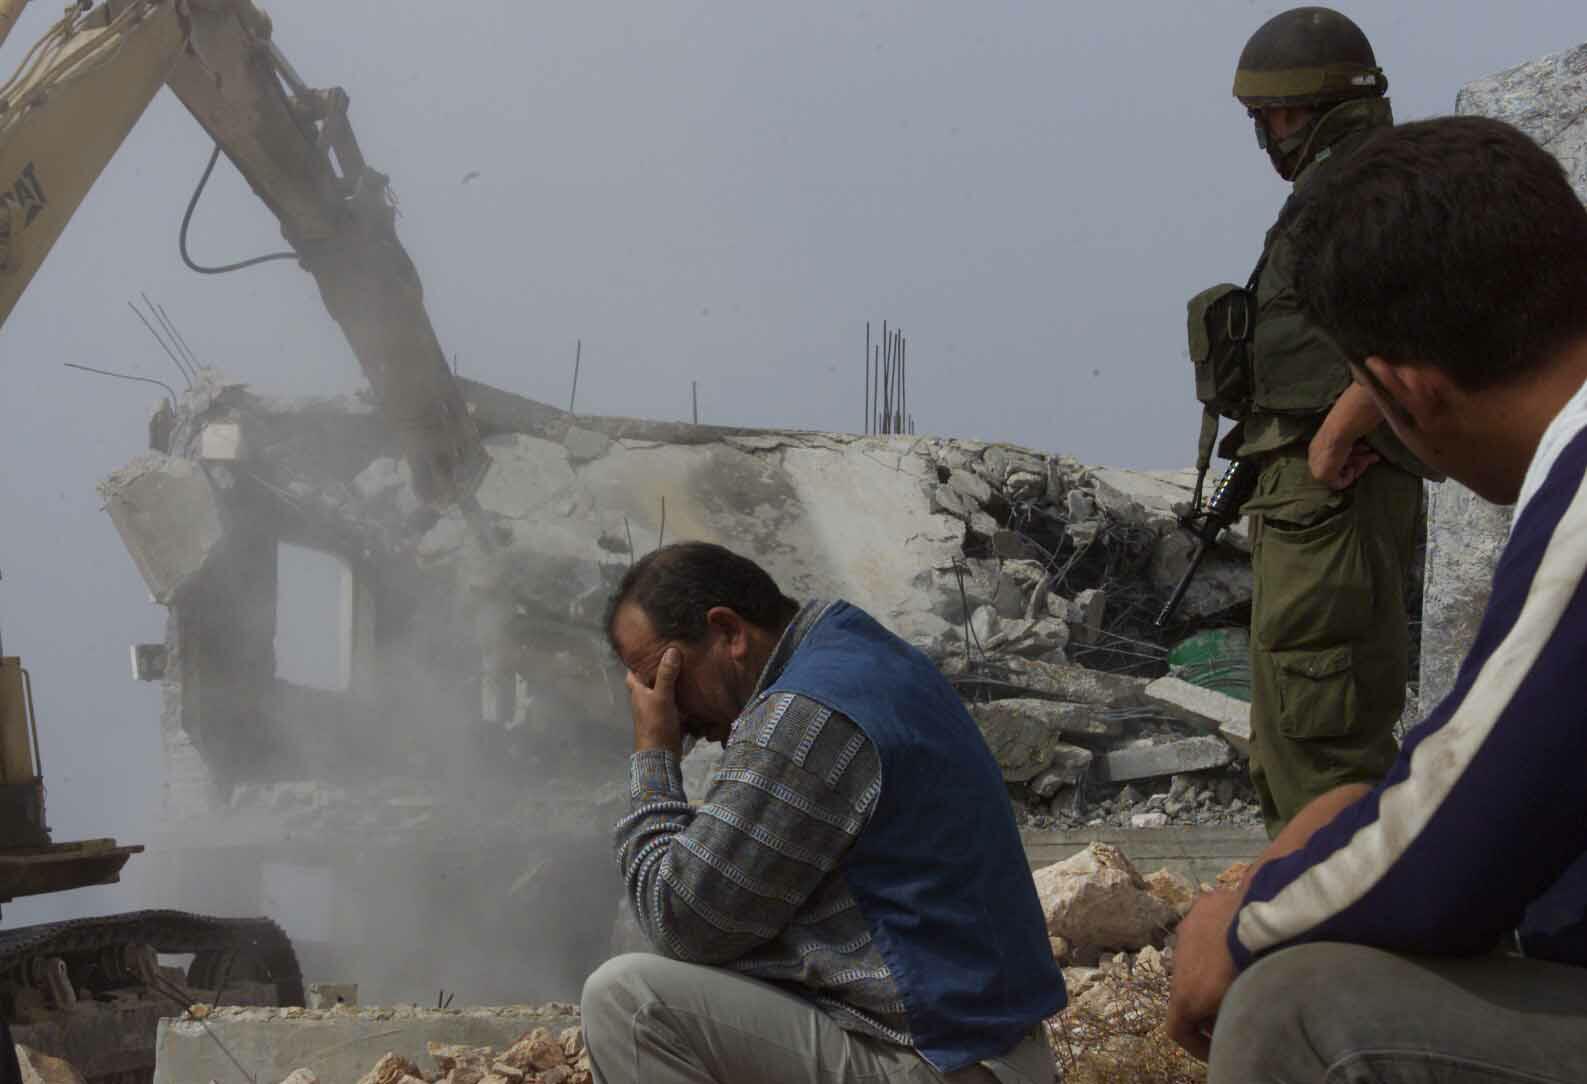 The Israeli military demolishes a Palestinian home